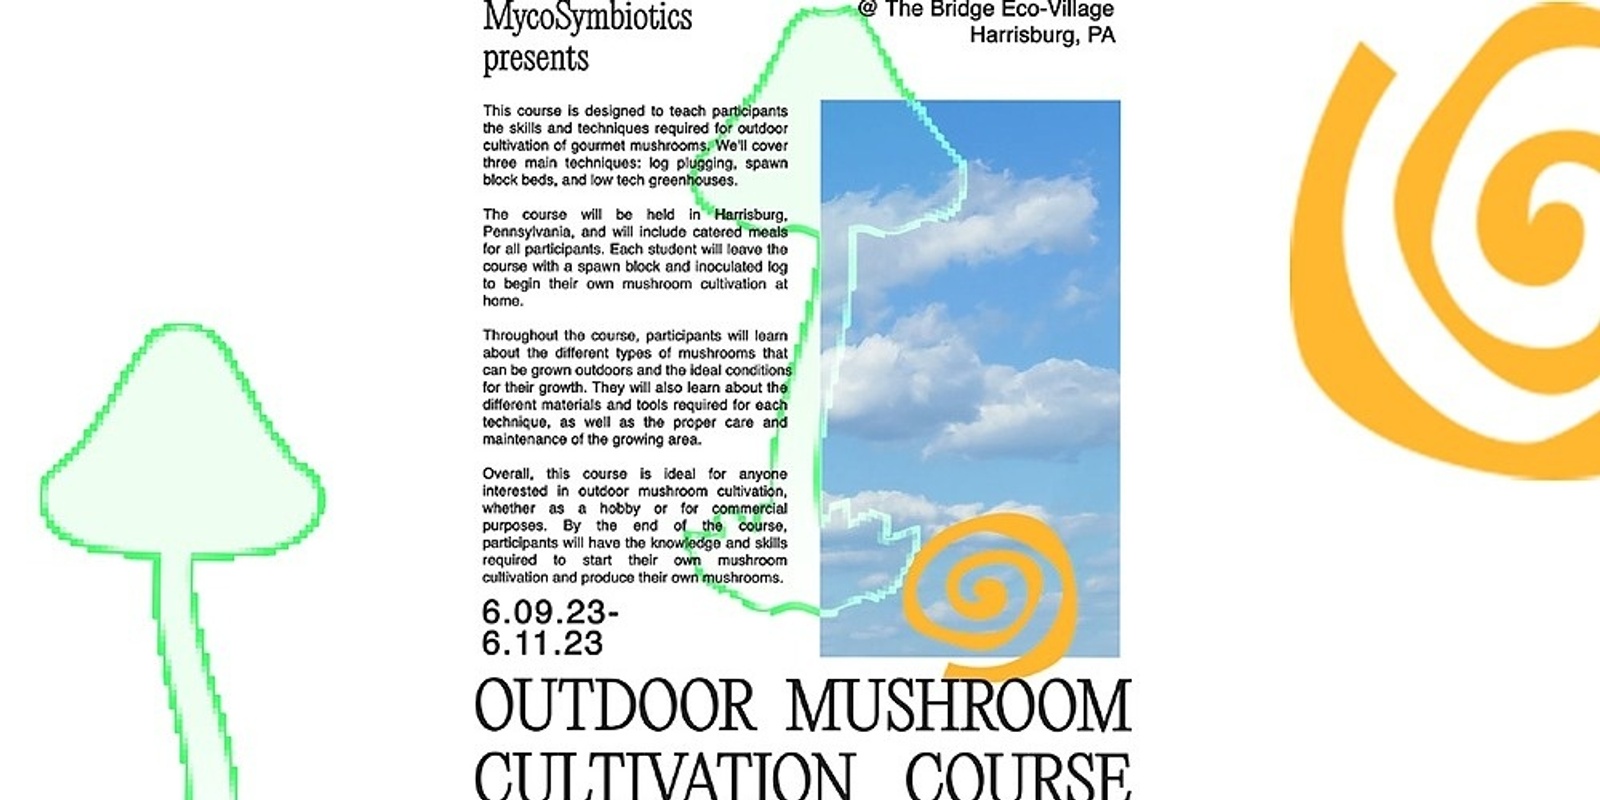 MycoSymbiotics' Outdoor Mushroom Cultivation Course